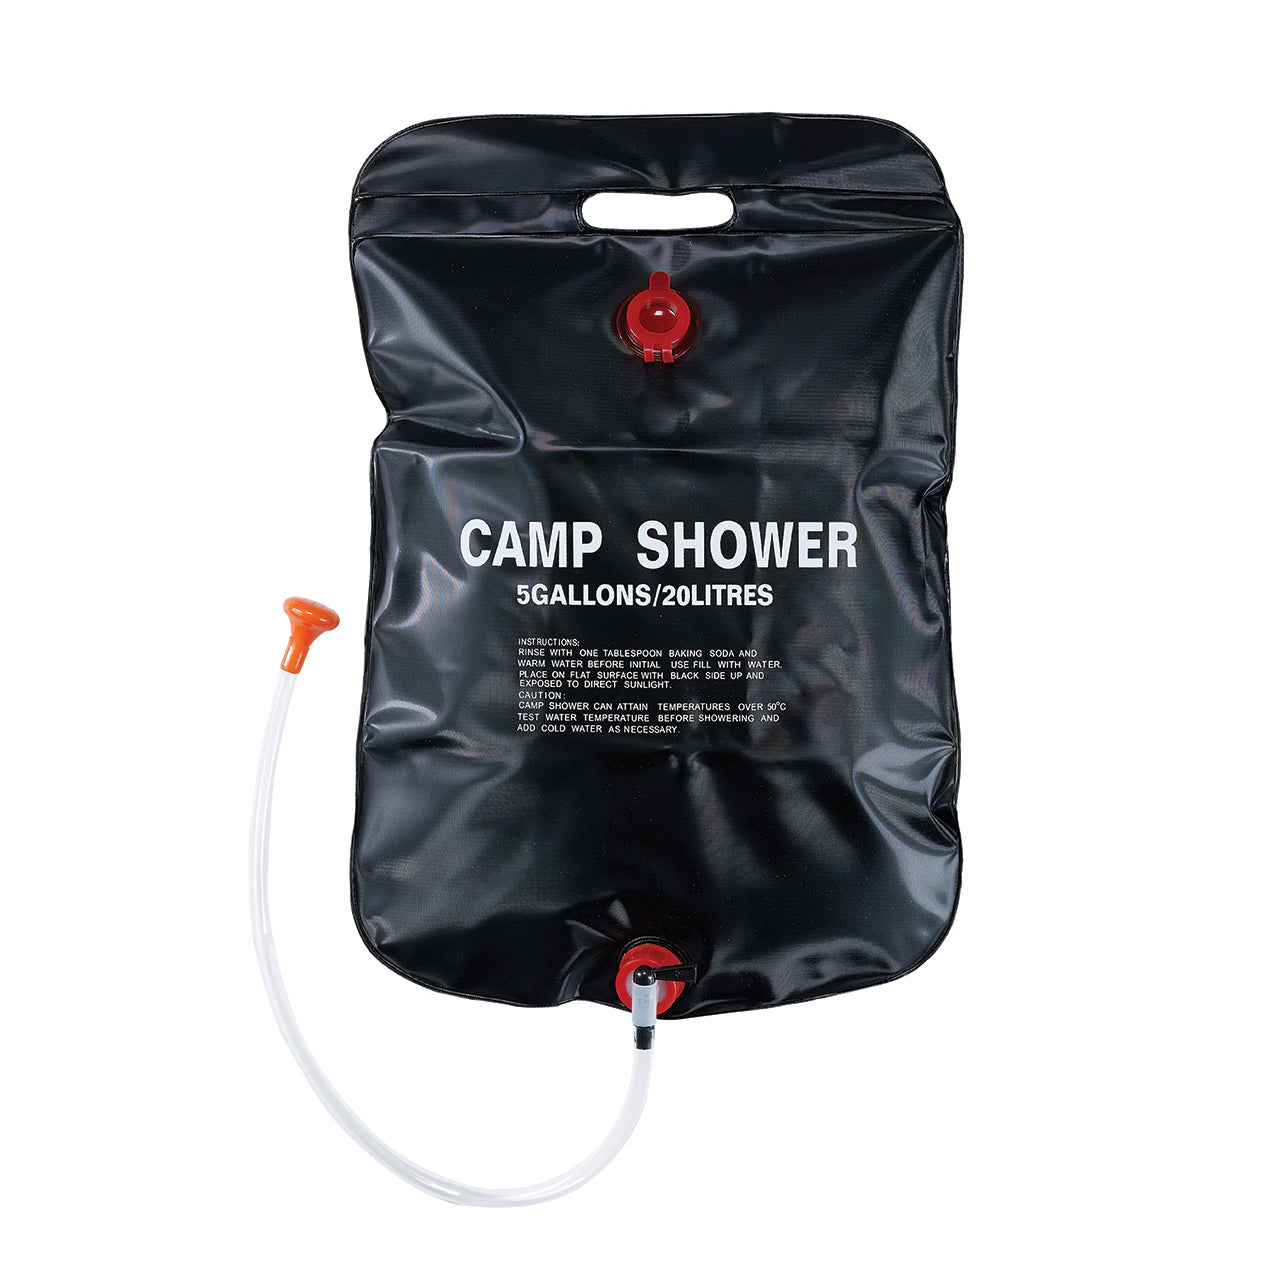 TrailGear 5 gallon Solar Shower Bag with Flexible Hose.